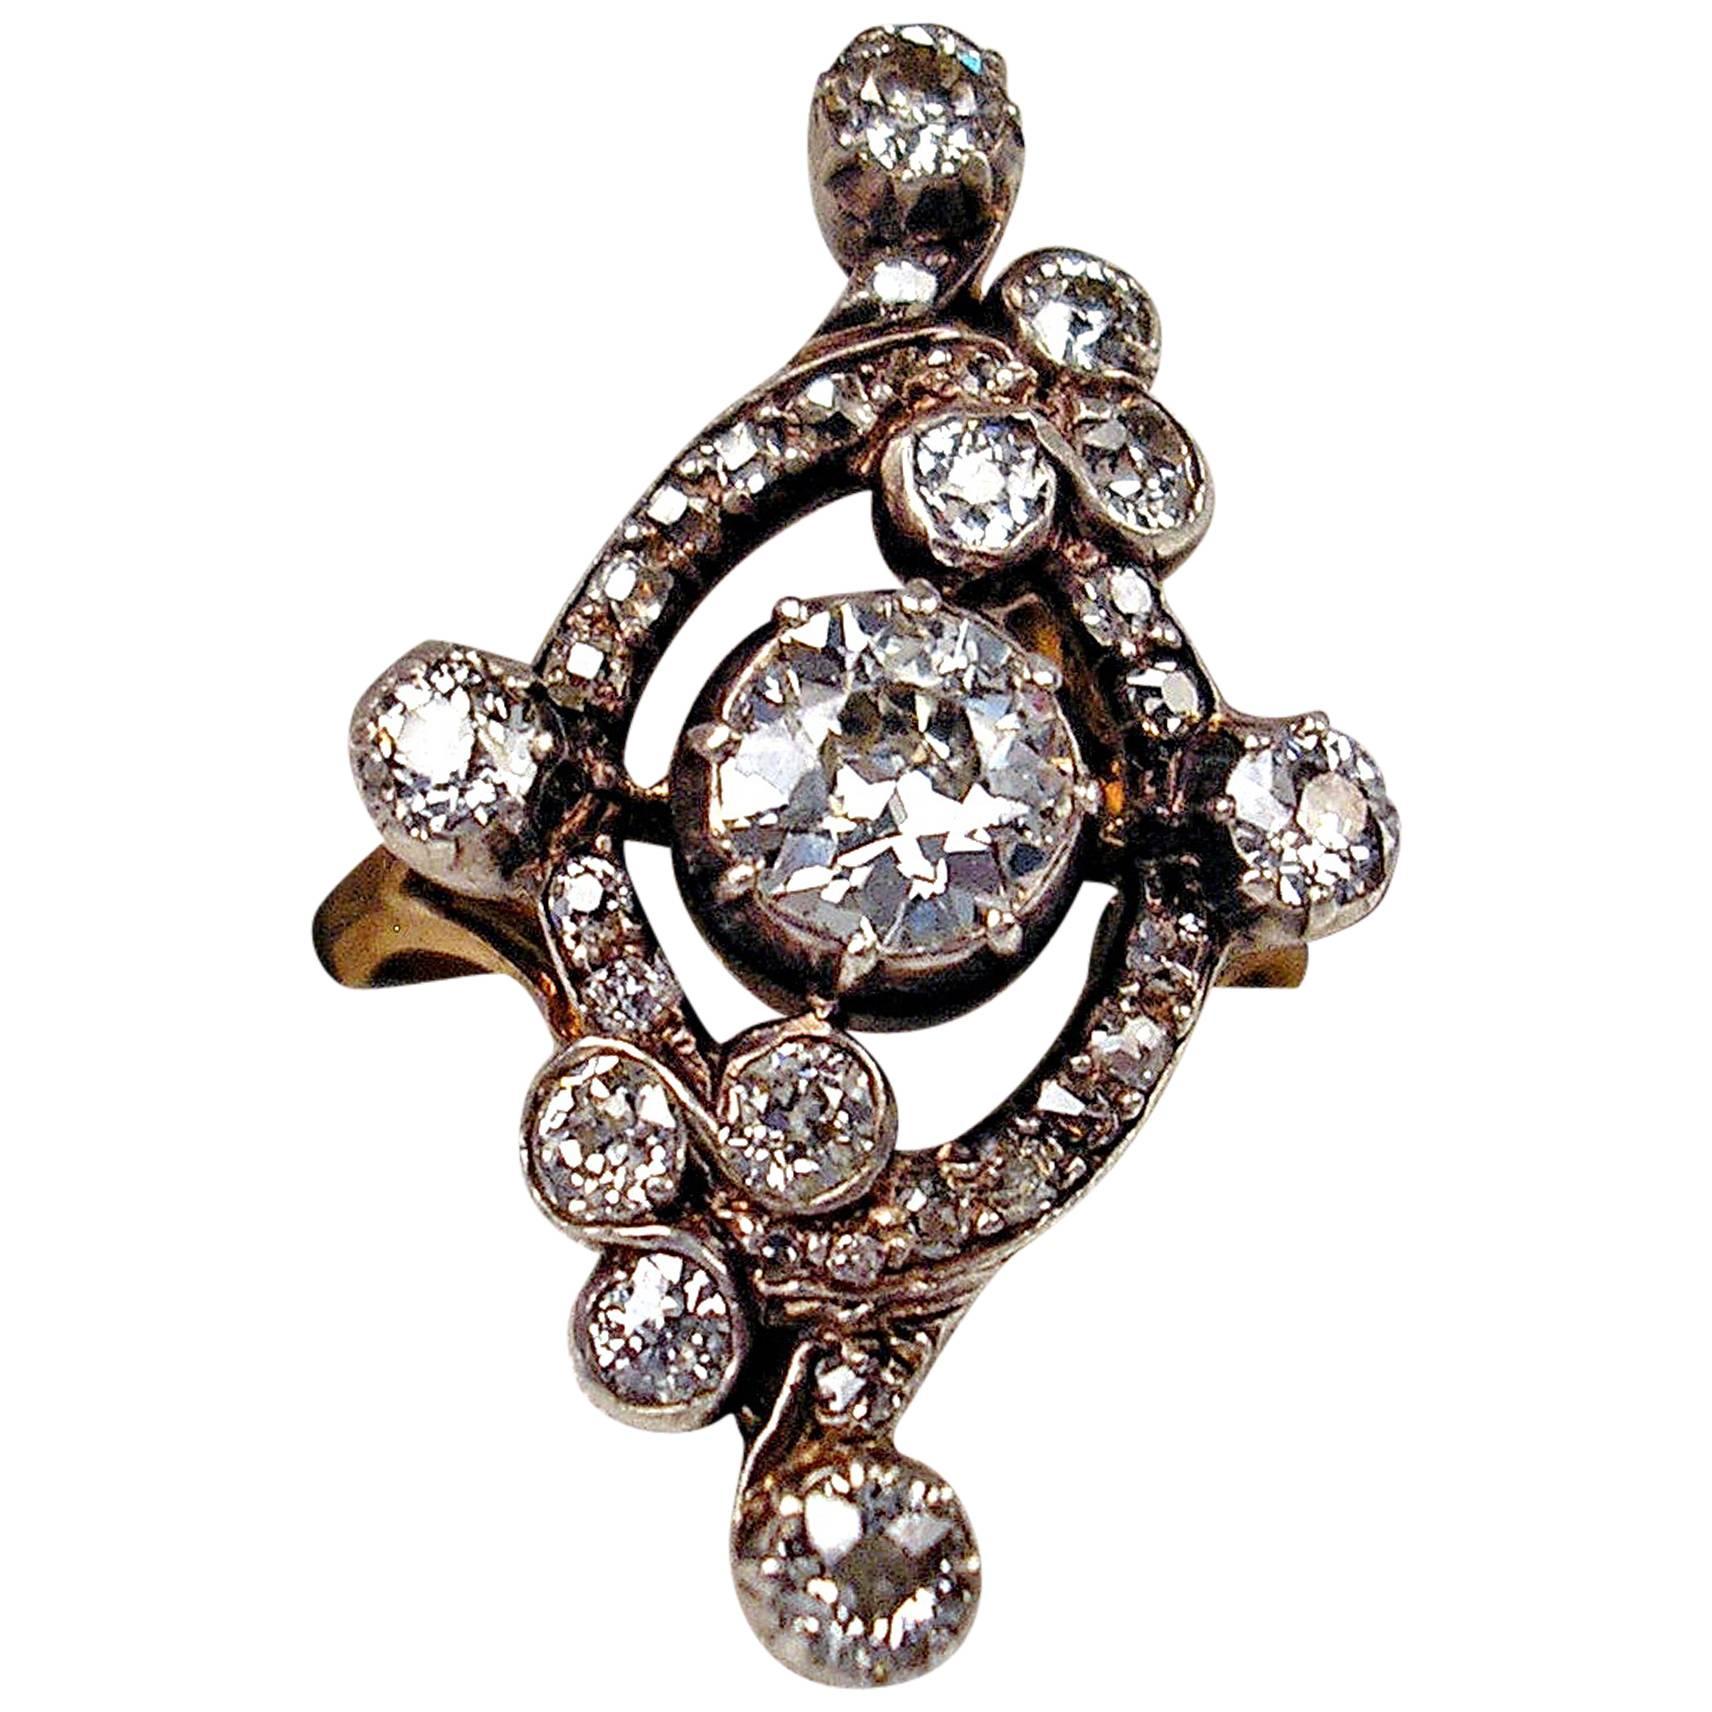 1900s Art Nouveau 2.10 Carats Diamonds Gold Ring Vienna